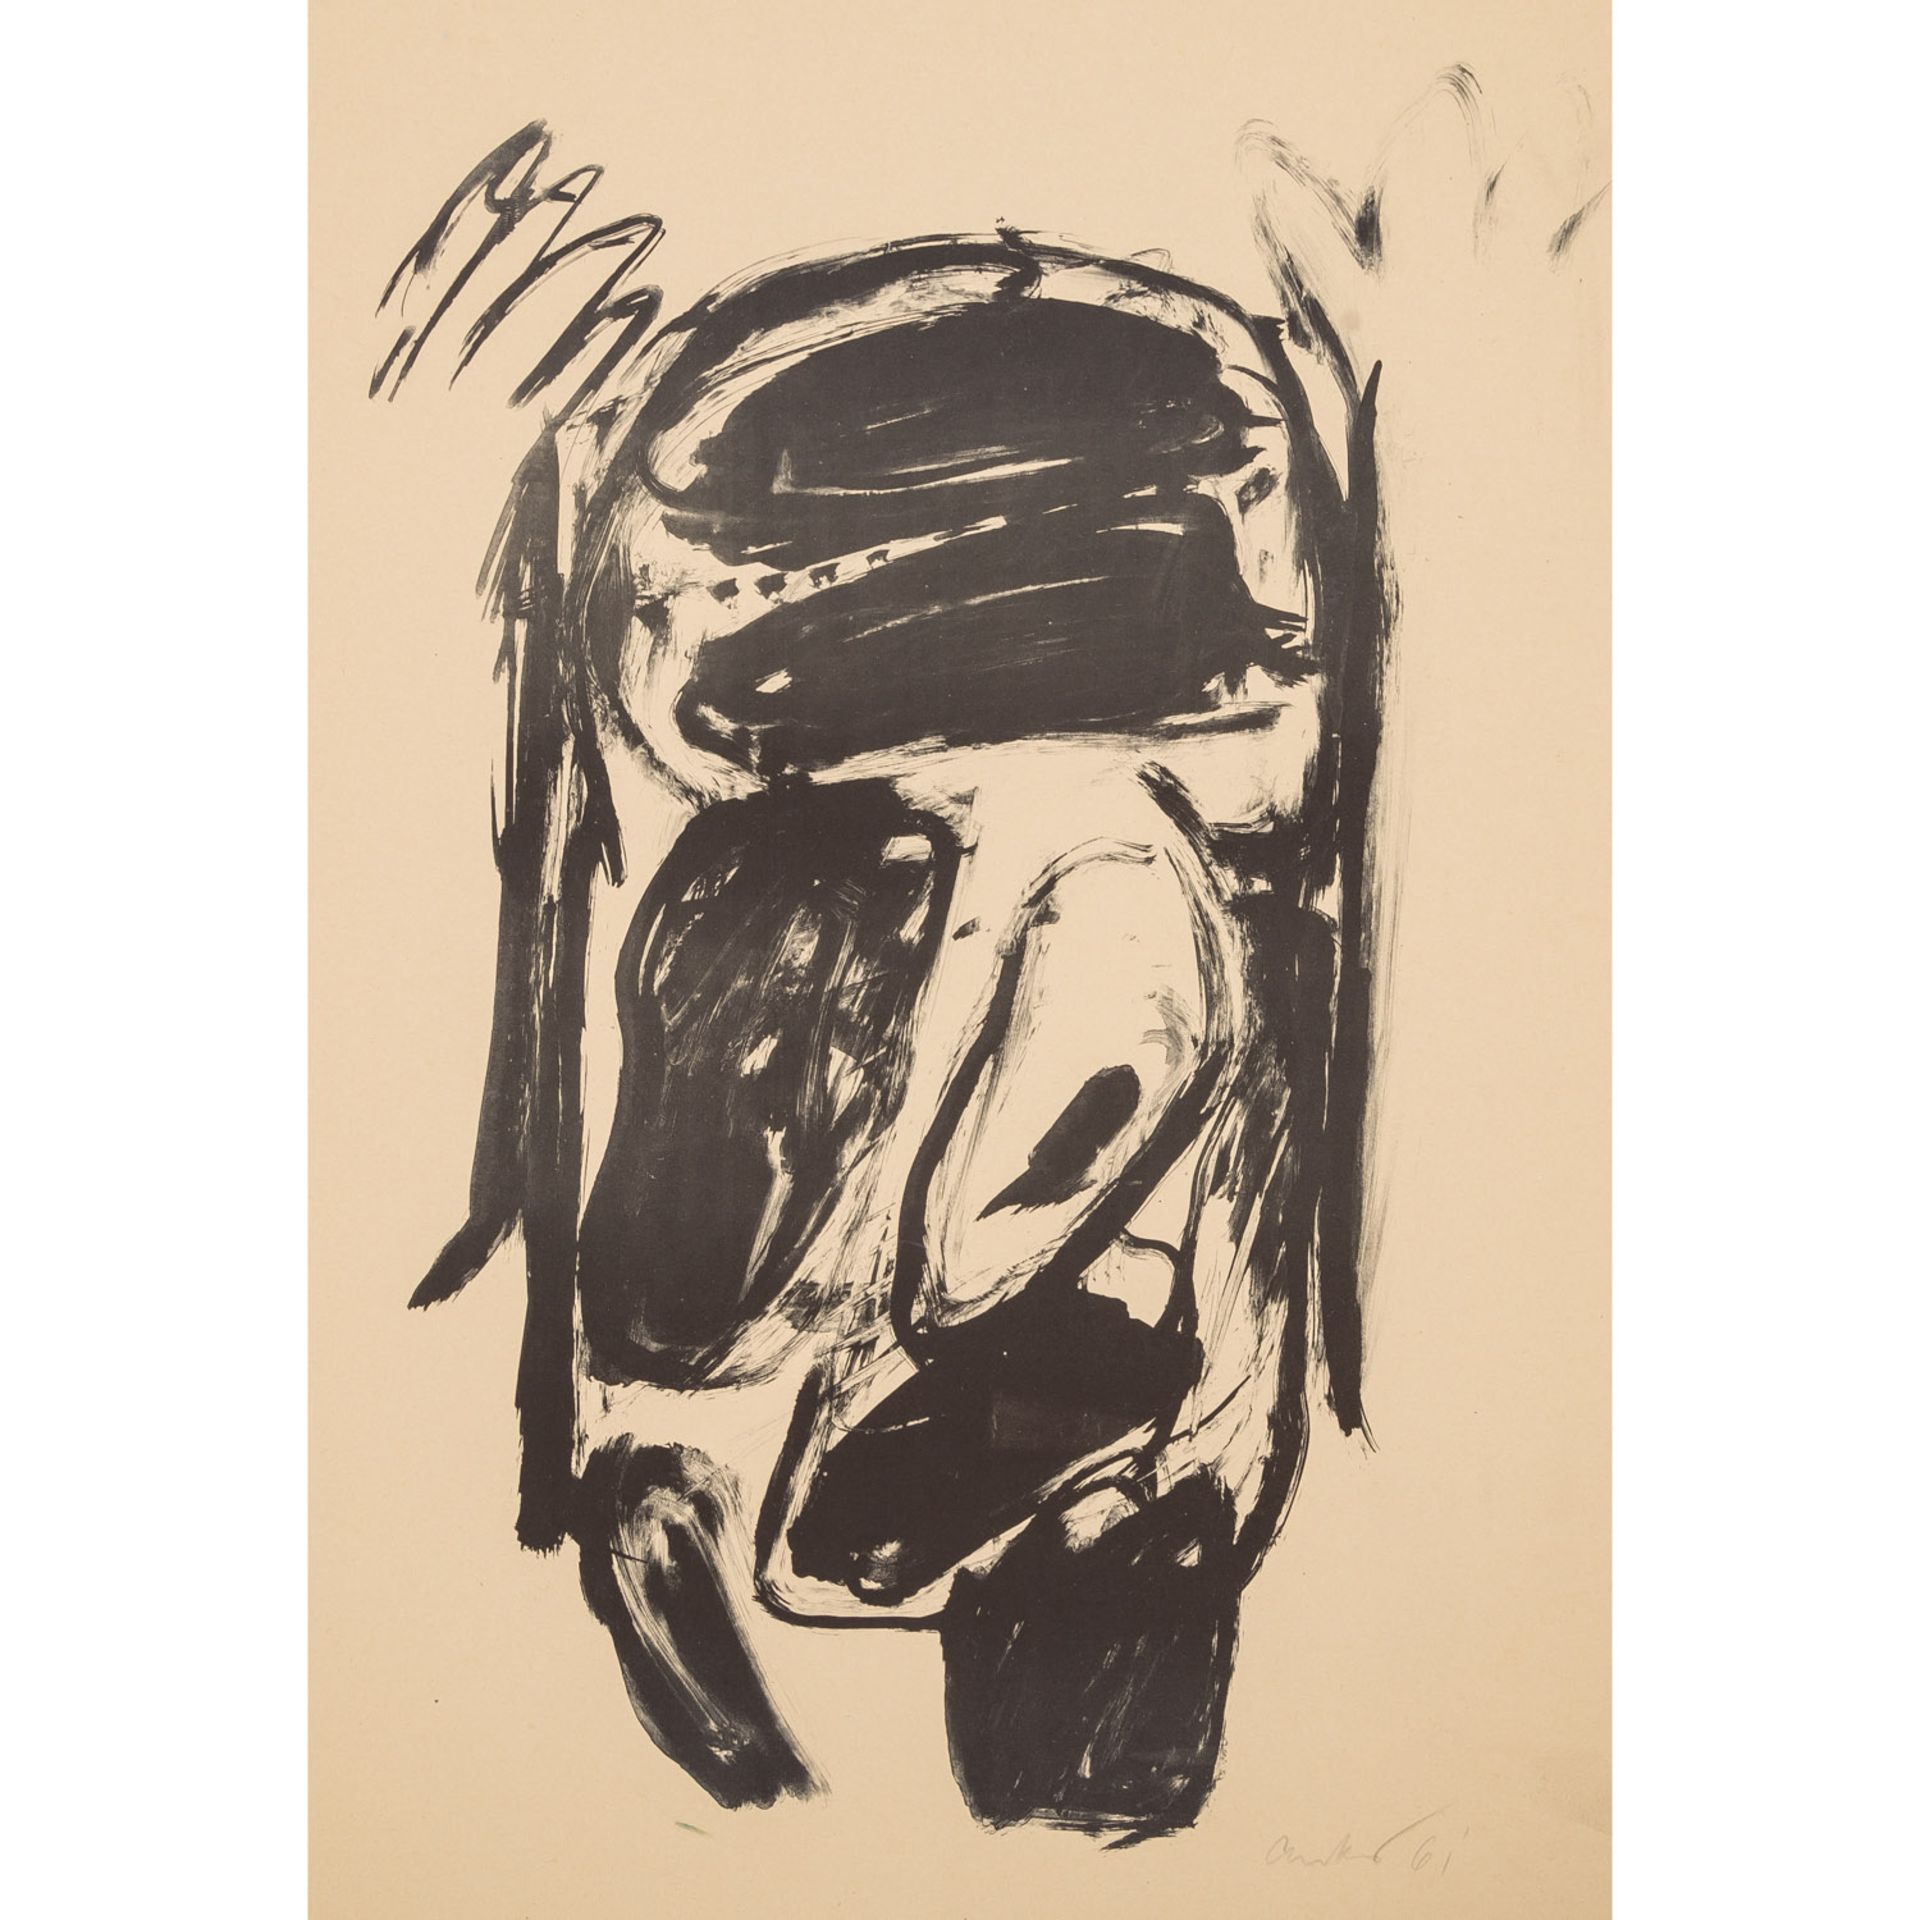 ANTES, HORST (1936) "Figur mit erhobenen Armen" 1961,